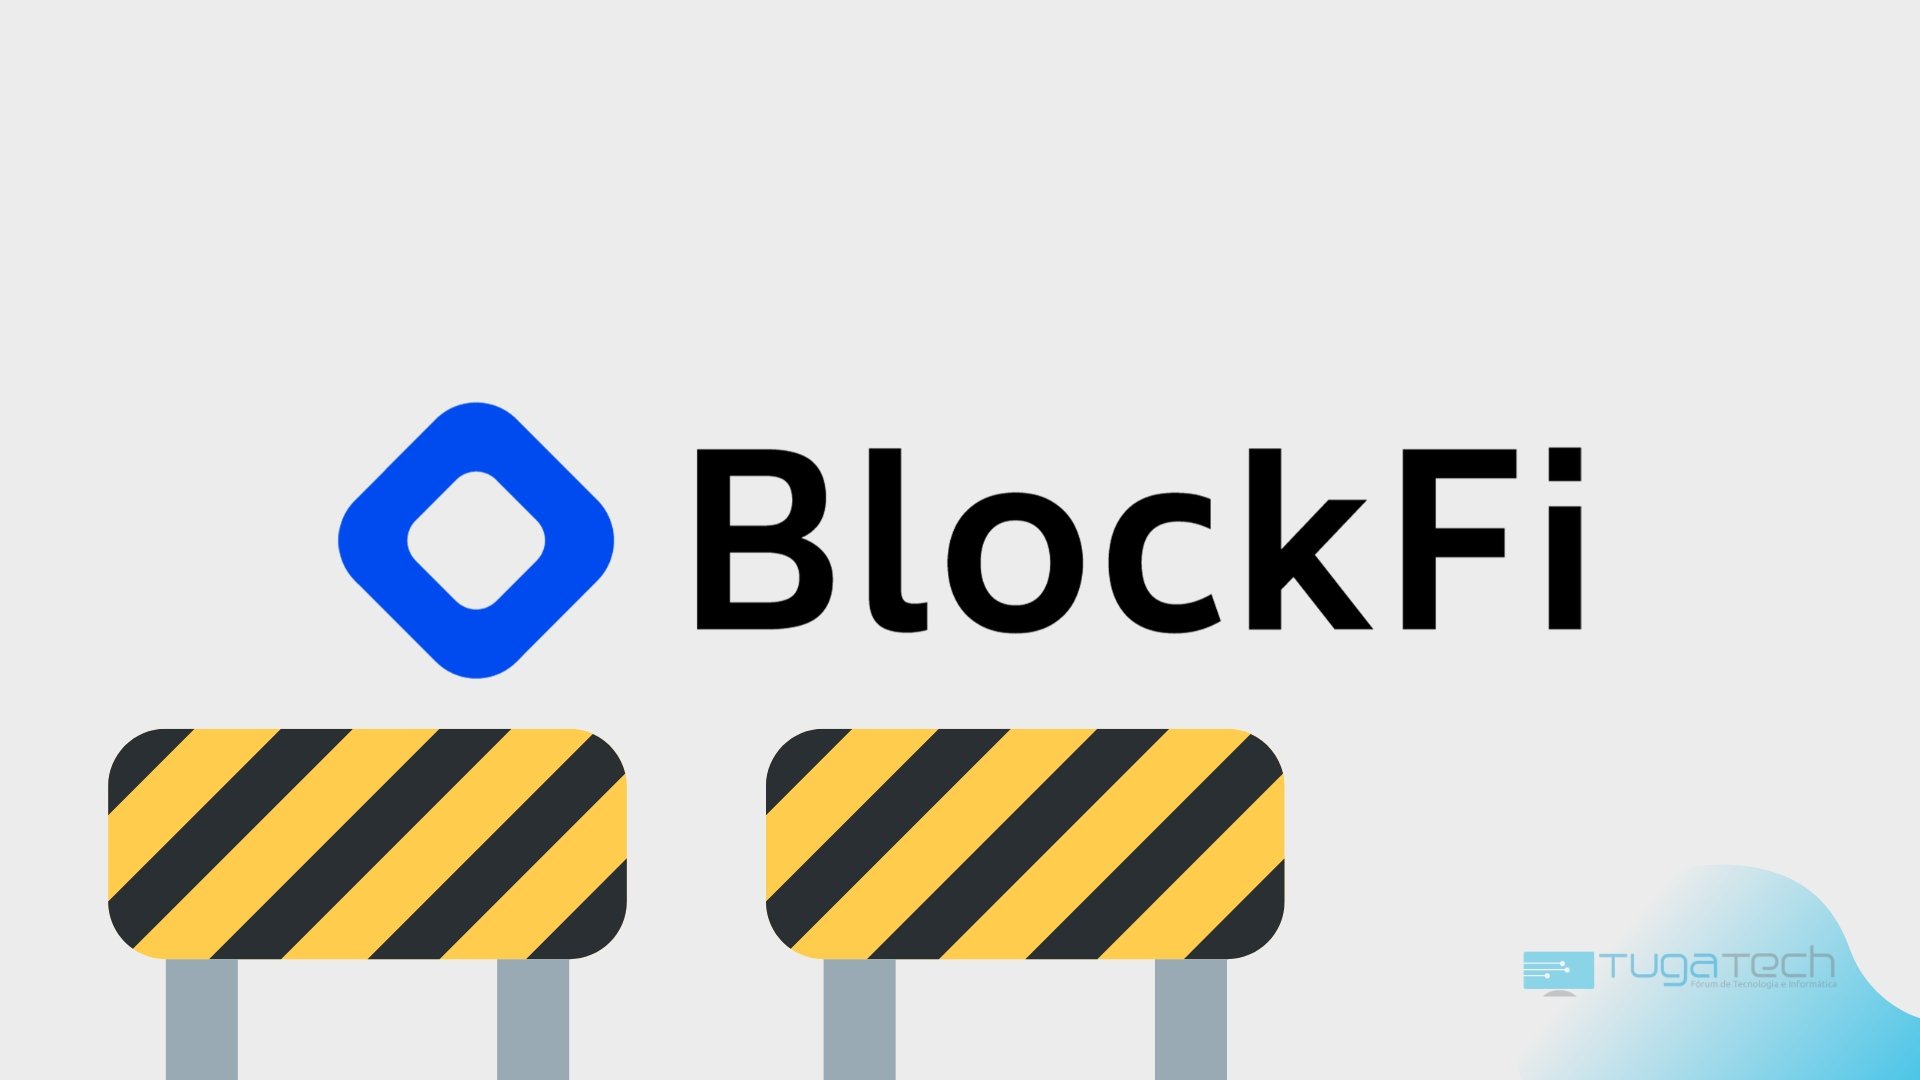 BlockFi com sinais de alerta para bloqueio de contas